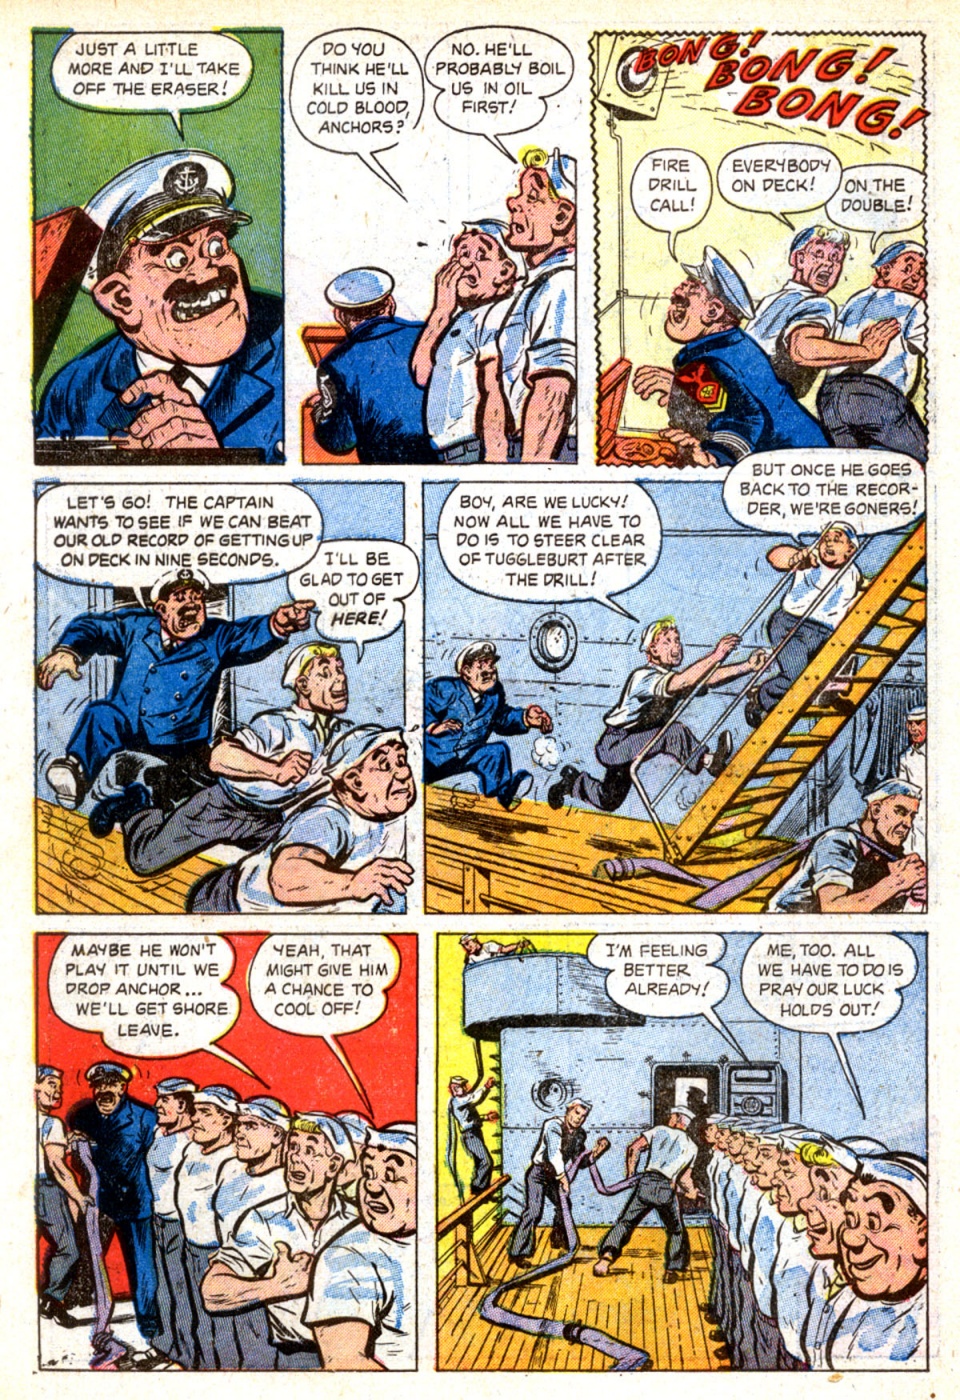 Anchors the Salt Water Daffy - Comics (b) (32)